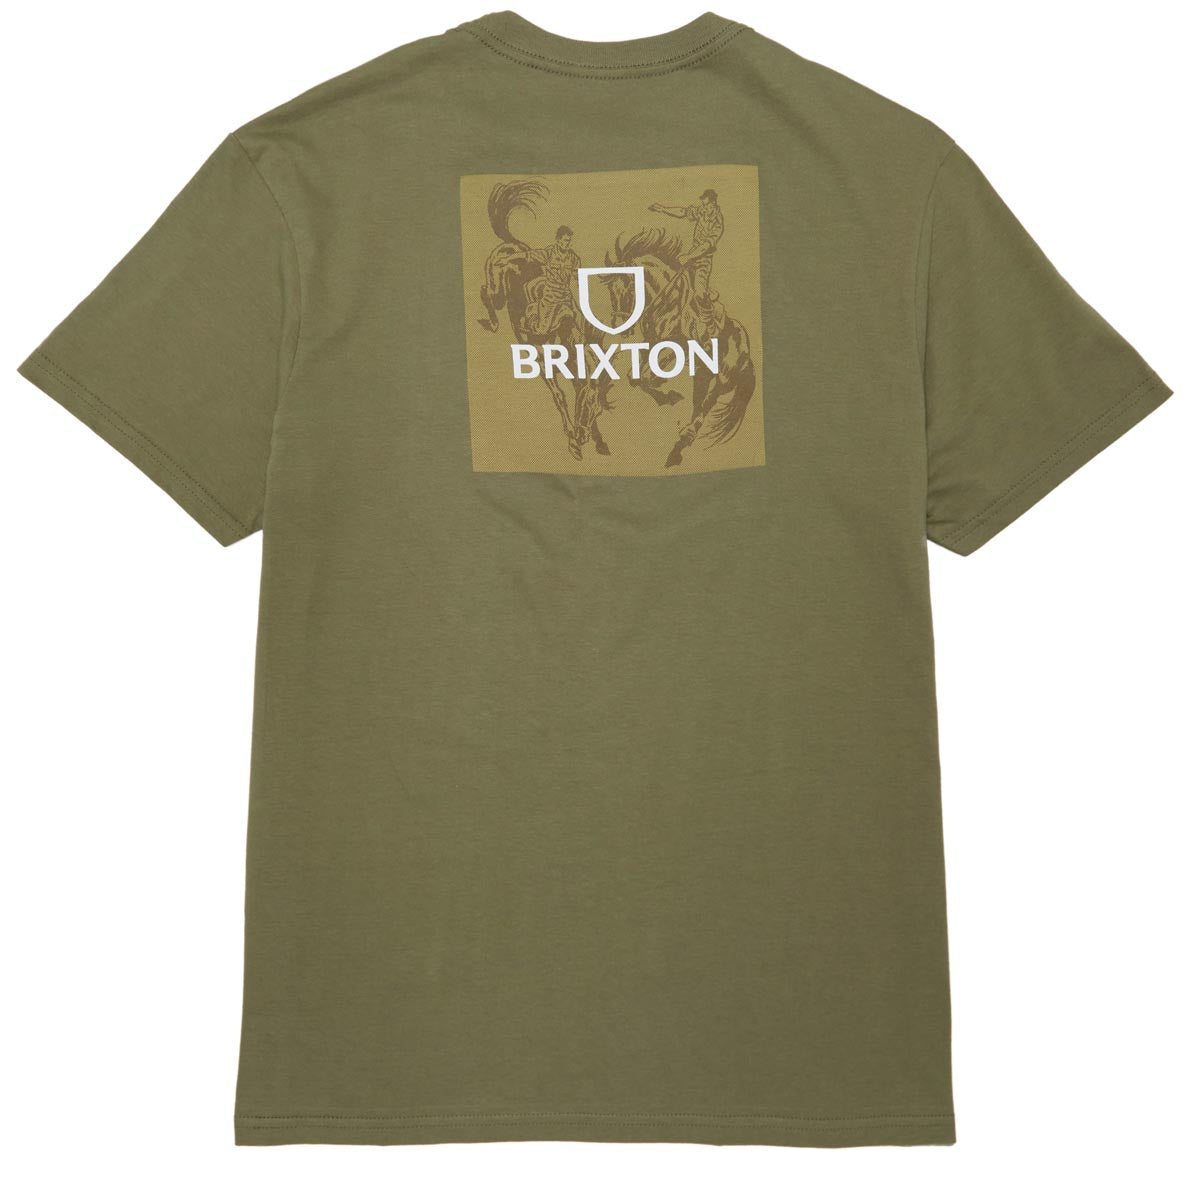 Brixton Alpha Square T-Shirt - Olive Surplus/Antelope/Off Whi image 1